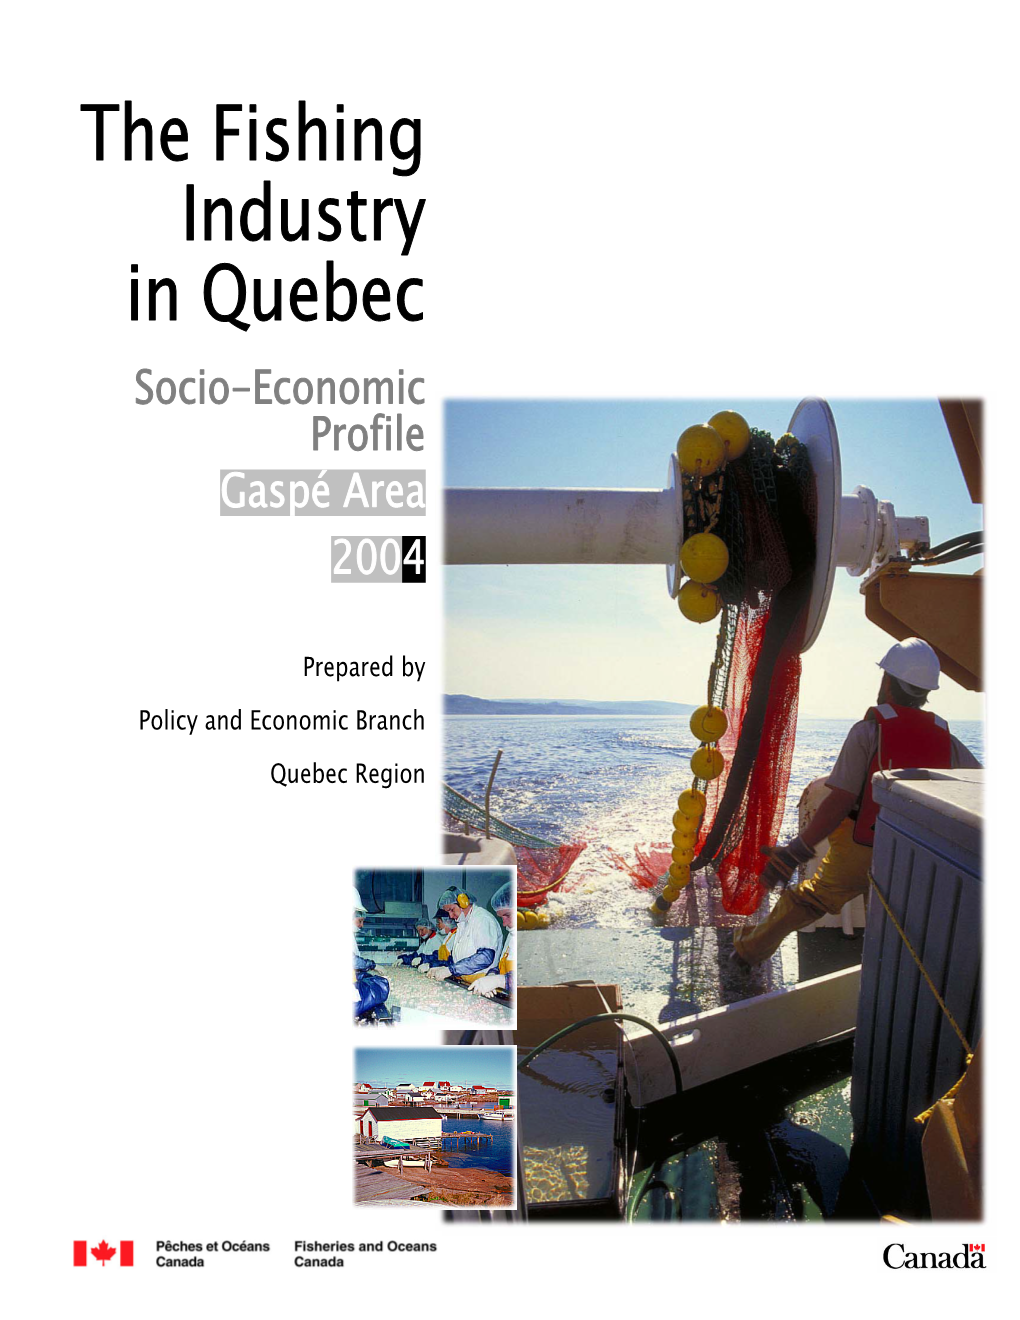 The Fishing Industry in Quebec Socio-Economic Profile Gaspé Area 2004